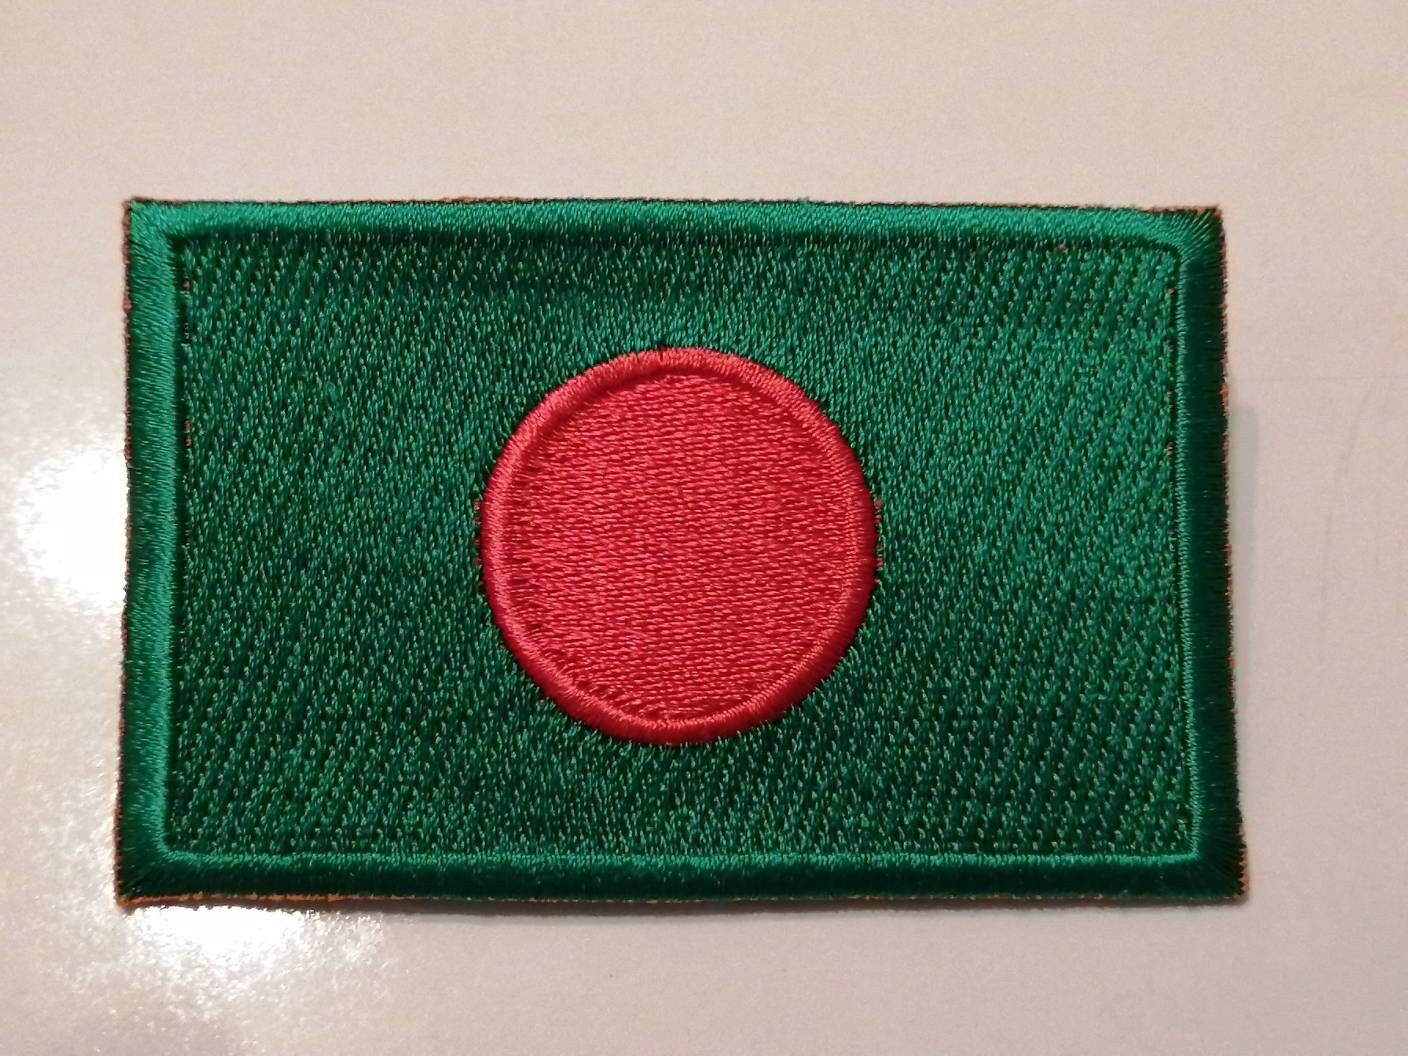 bengali flag